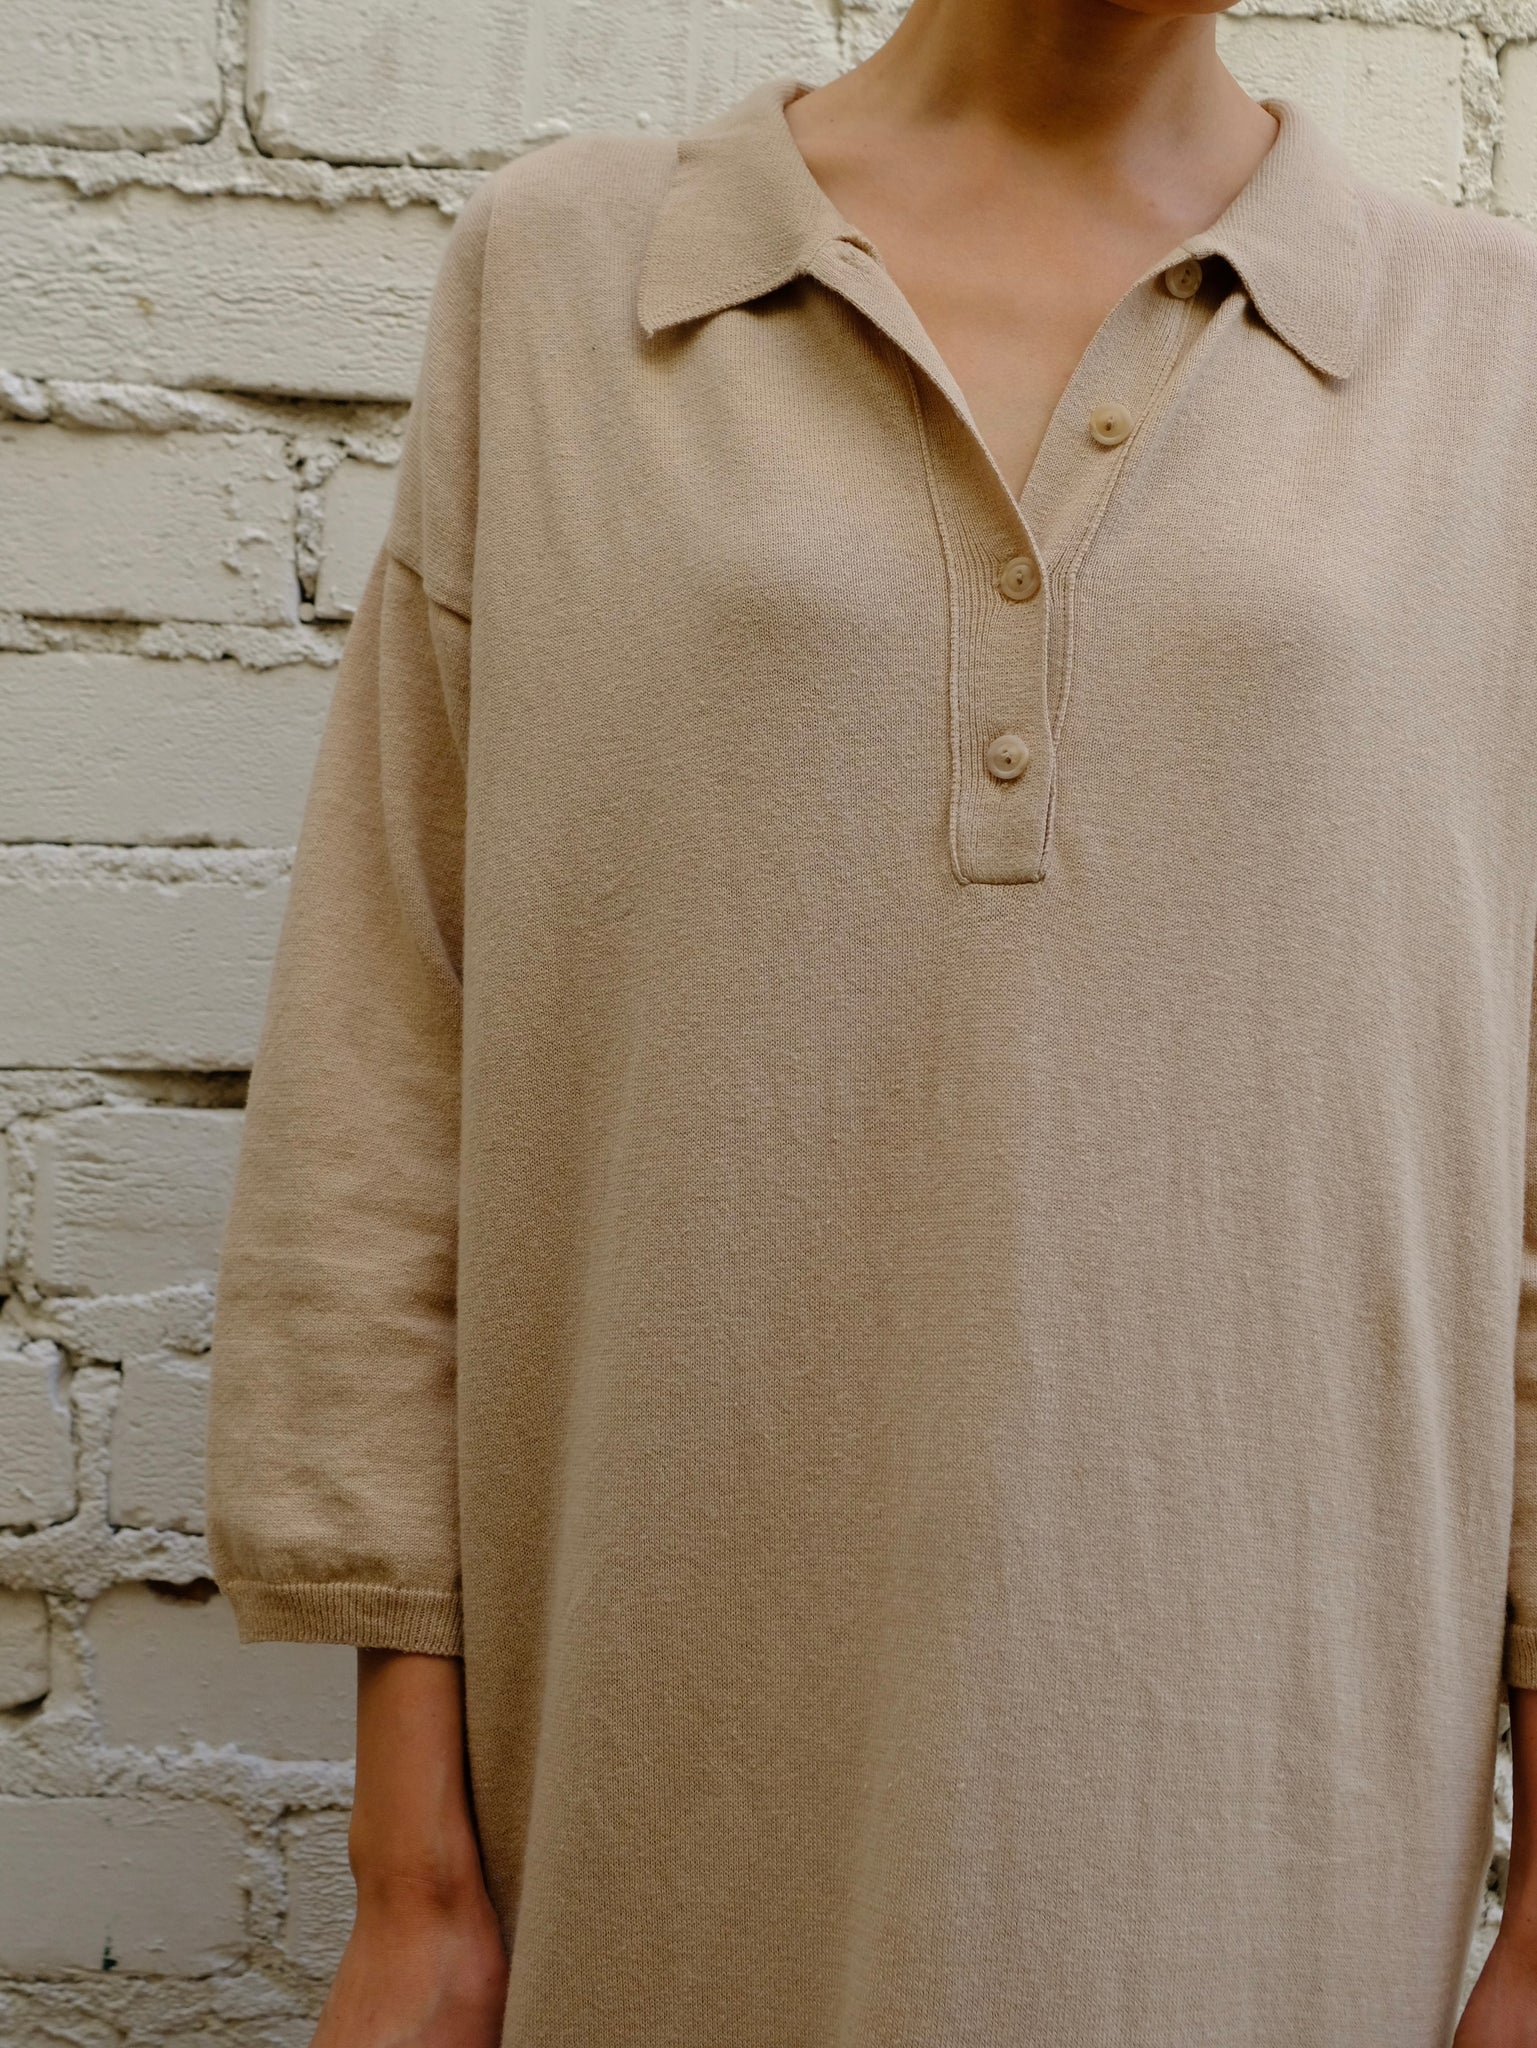 Polo Shirt Knit Dress - Beige